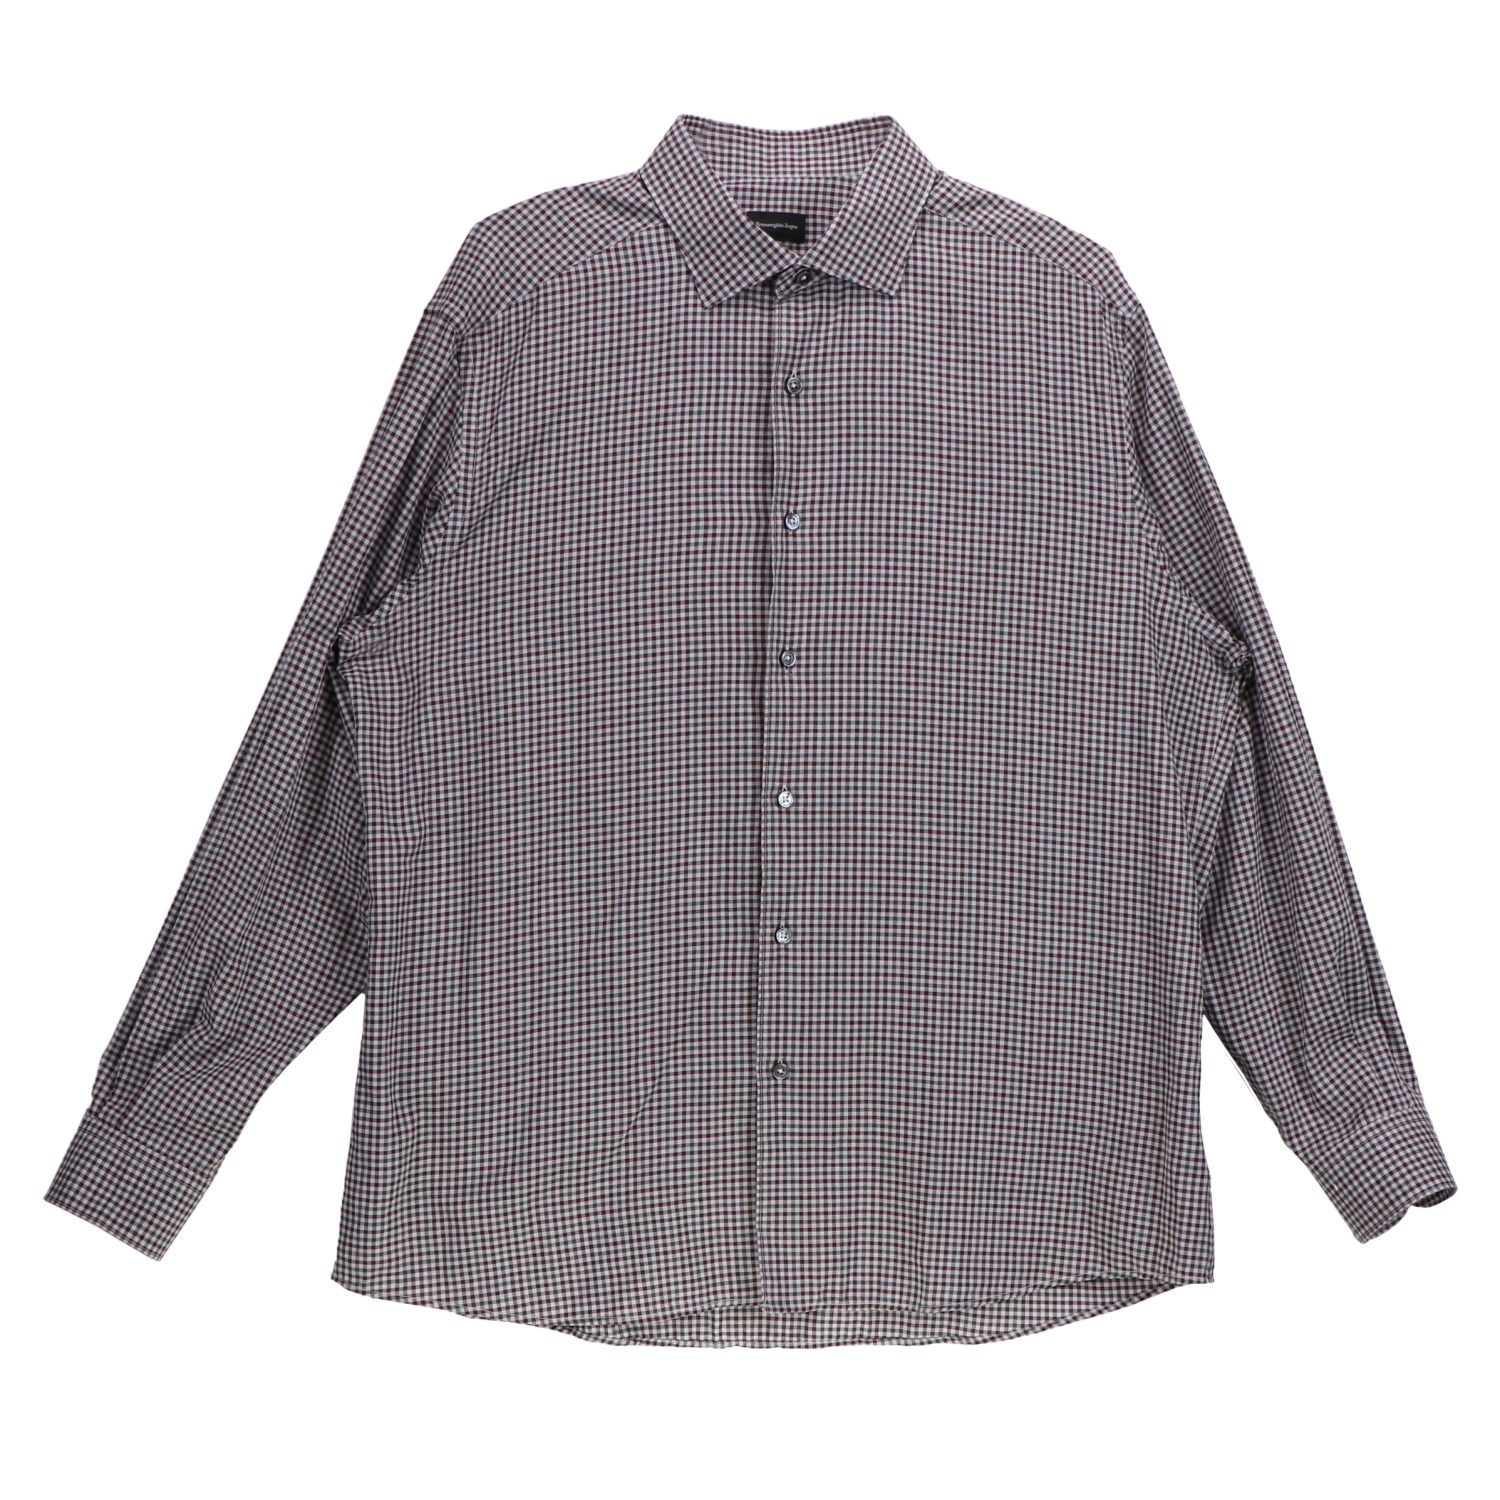 Zegna Men's Checkered Long Sleeve Dress Shirt | eBay